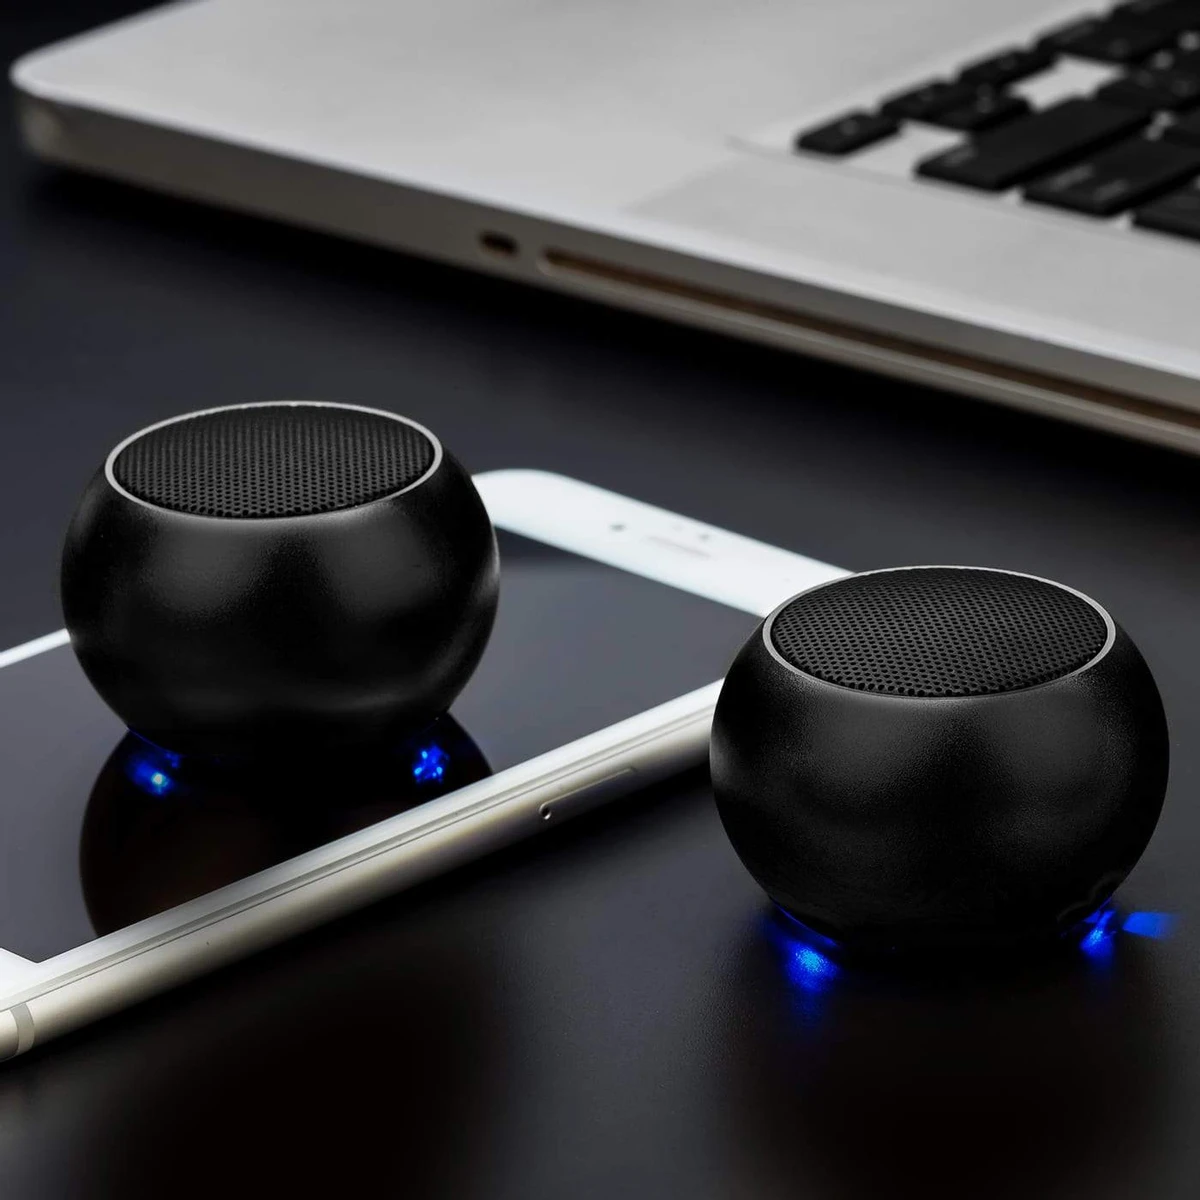 JBL_M3 Mini Portable 3D Speaker BLUETOOTH SPEAKERS